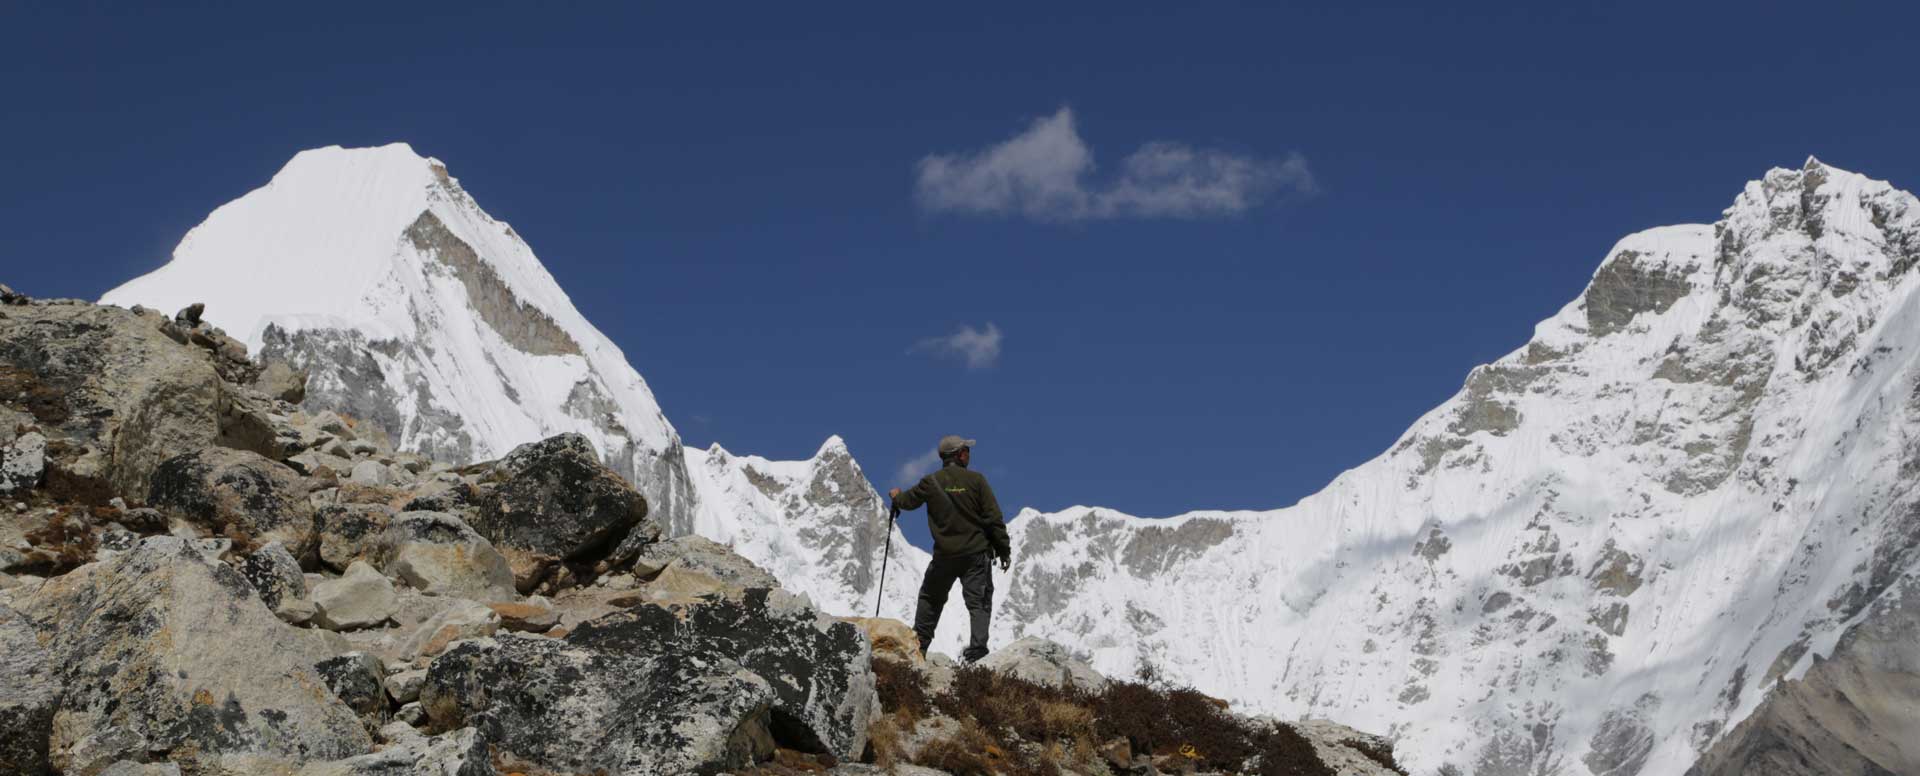 Everest Base Camp 12 Days Trek